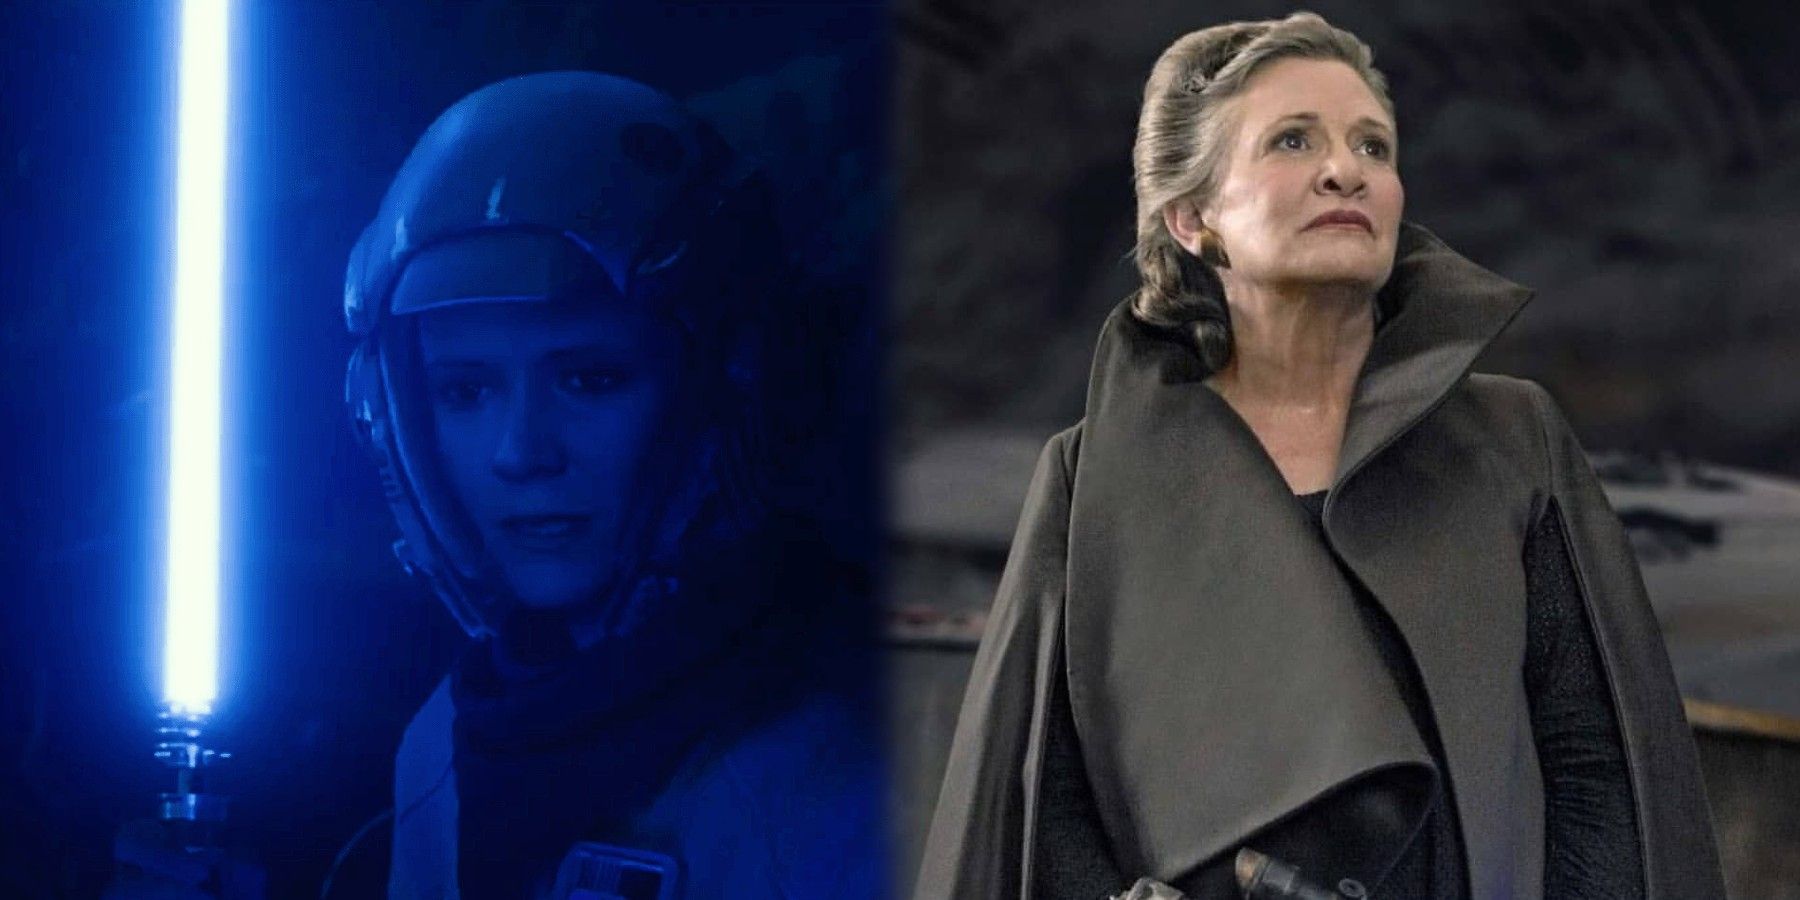 Star Wars General Princess Leia Organa lightsaber